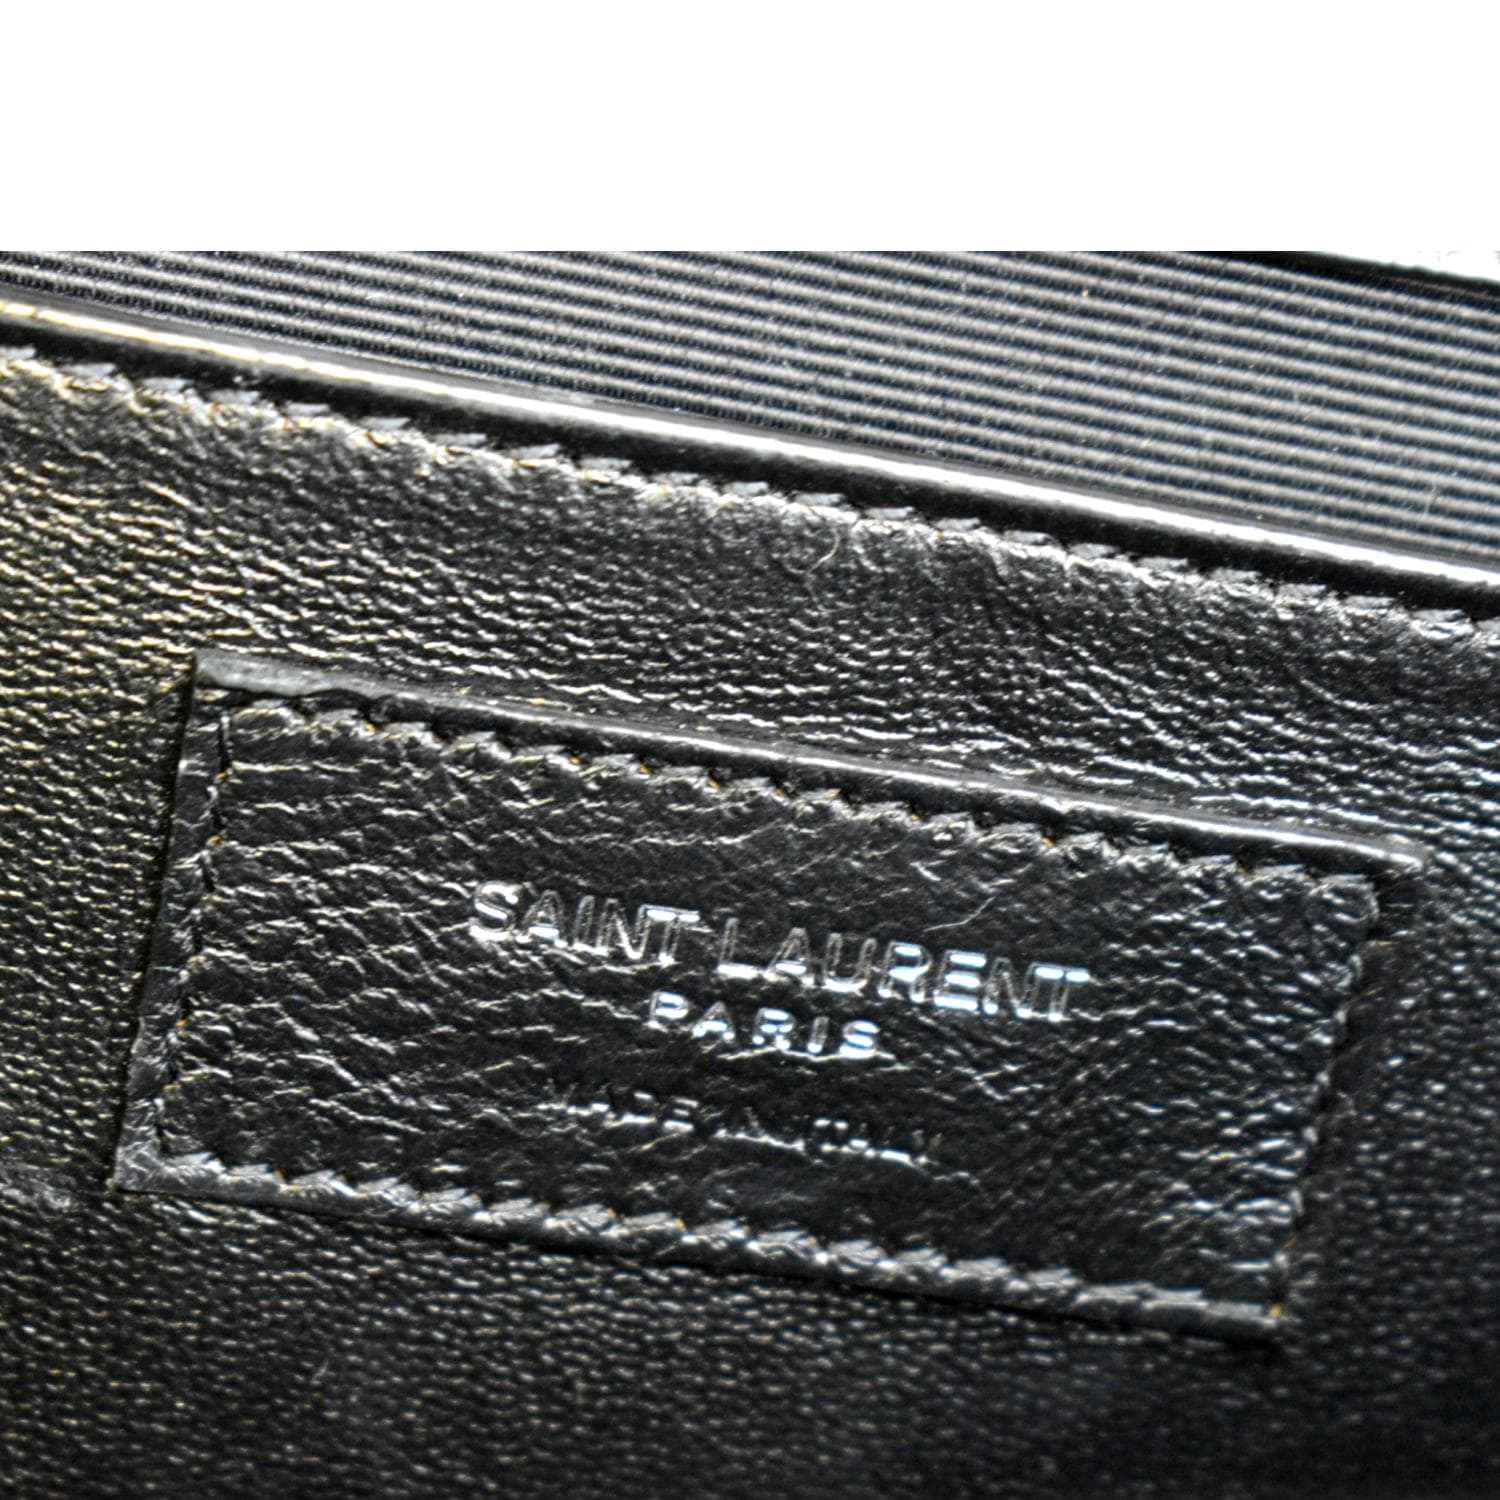 Yves Saint Laurent Kate Medium Grain de Poudre Leather Crossbody Bag Black